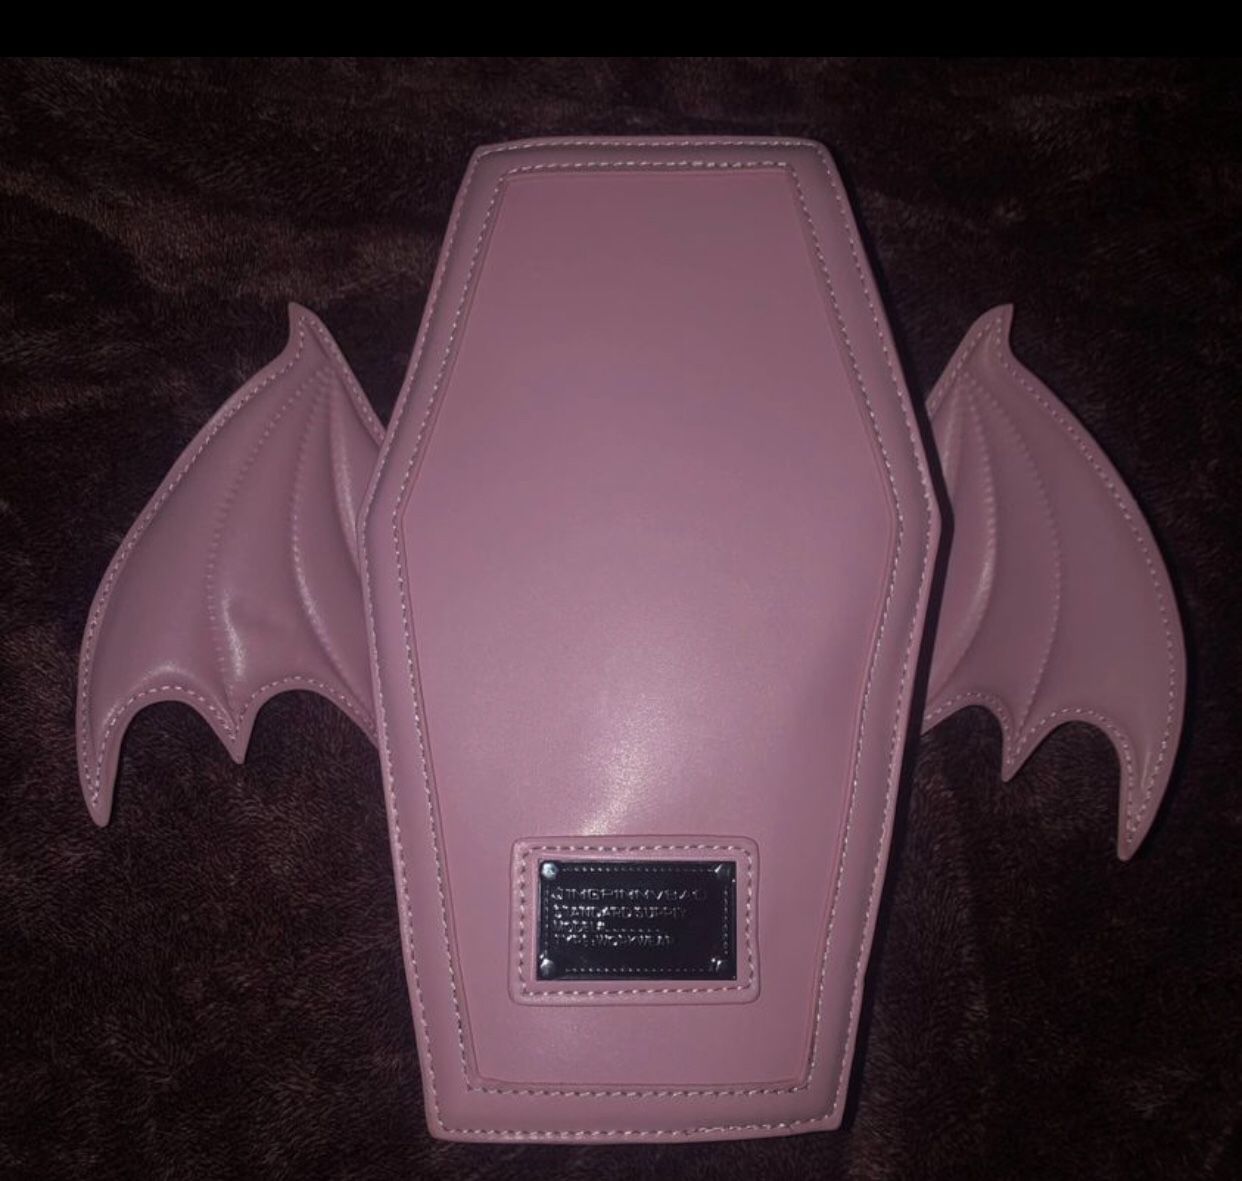 ⚰️ Coffin & Bat Wing 🦇 Purse / Backpack - Pastel Pink